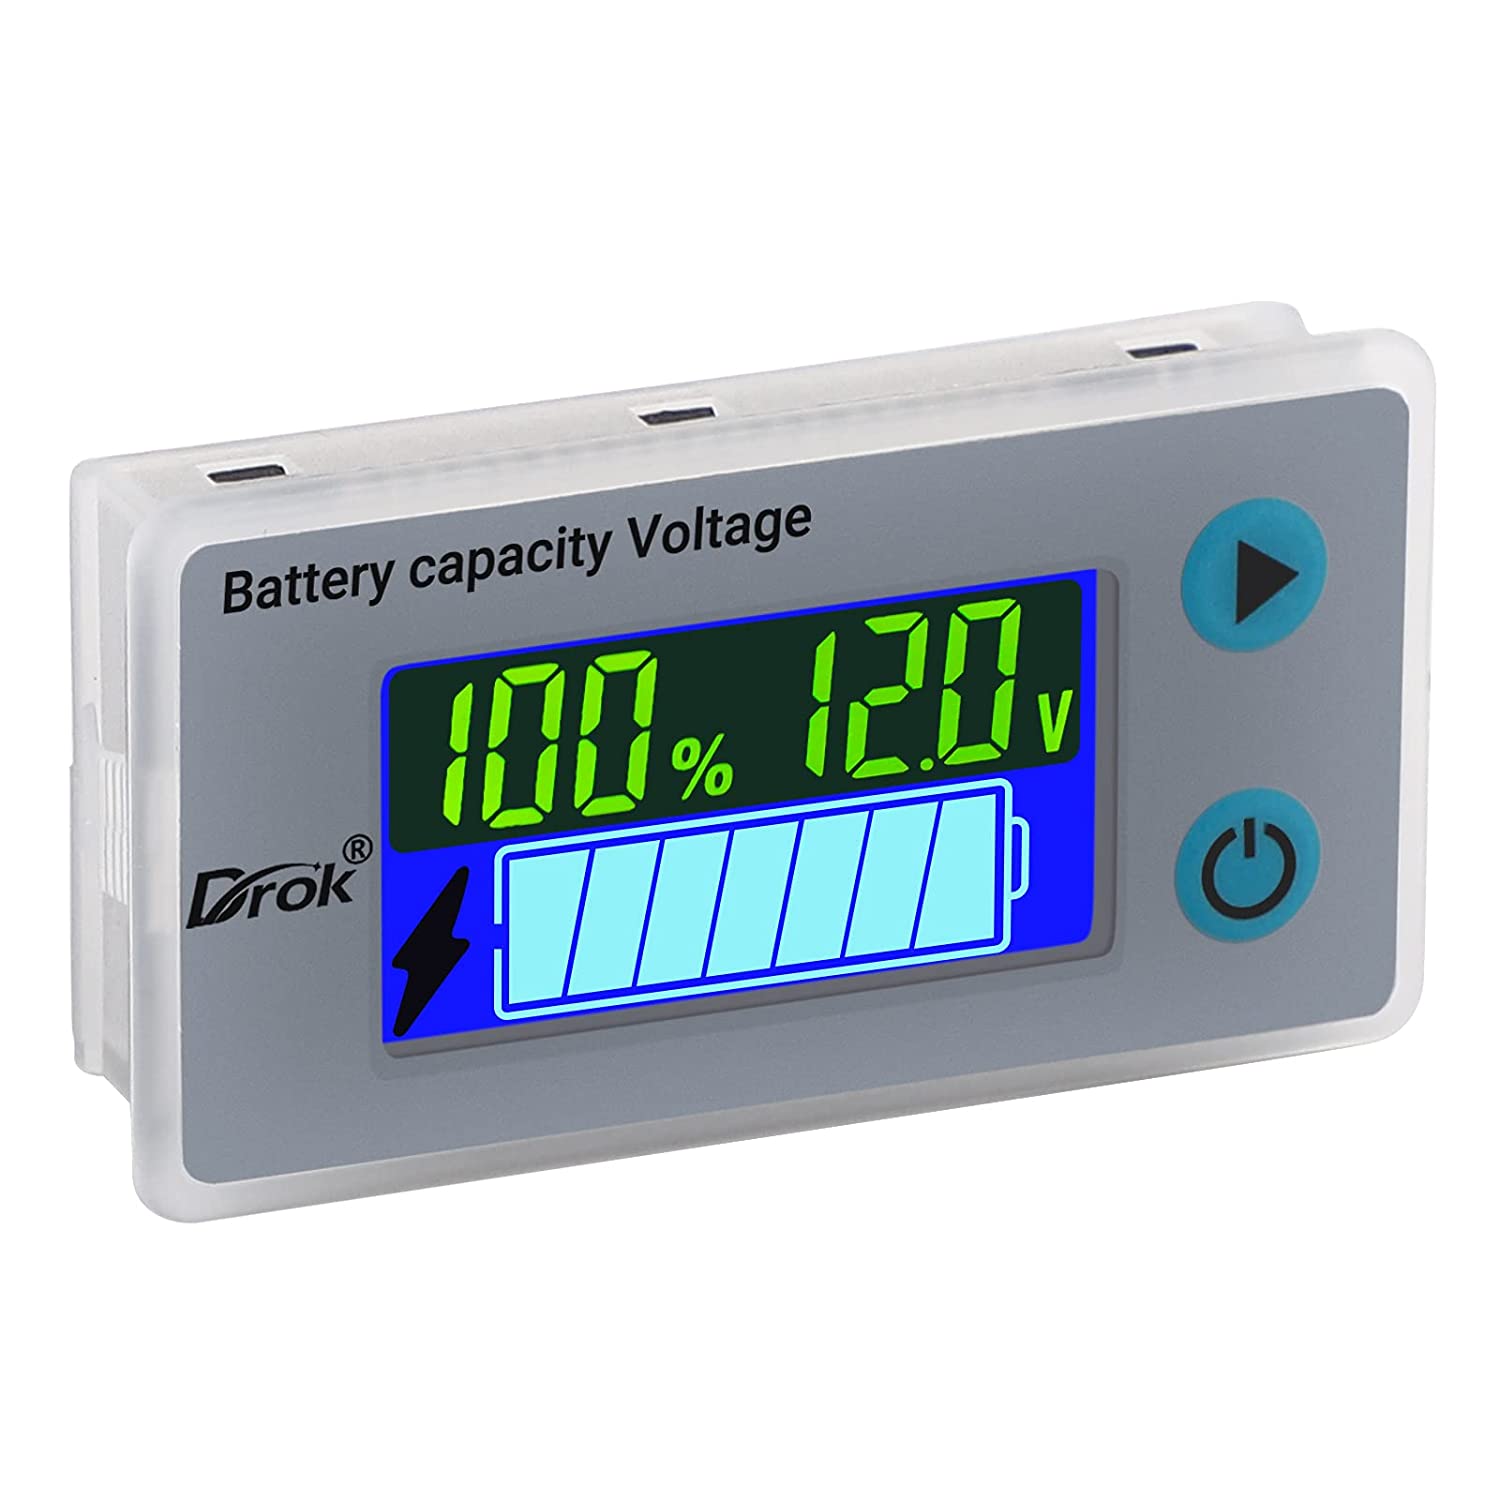 https://www.droking.com/image/cache/catalog/12V-Battery-Capacity-Monitor-DROK-10-100V-24V-36V-48V-Digital-Battery-St/12V-Battery-Capacity-Monitor-DROK-10-100V-24V-36V-48V-Digital-Battery-Status-Tes-1500x1500.jpg